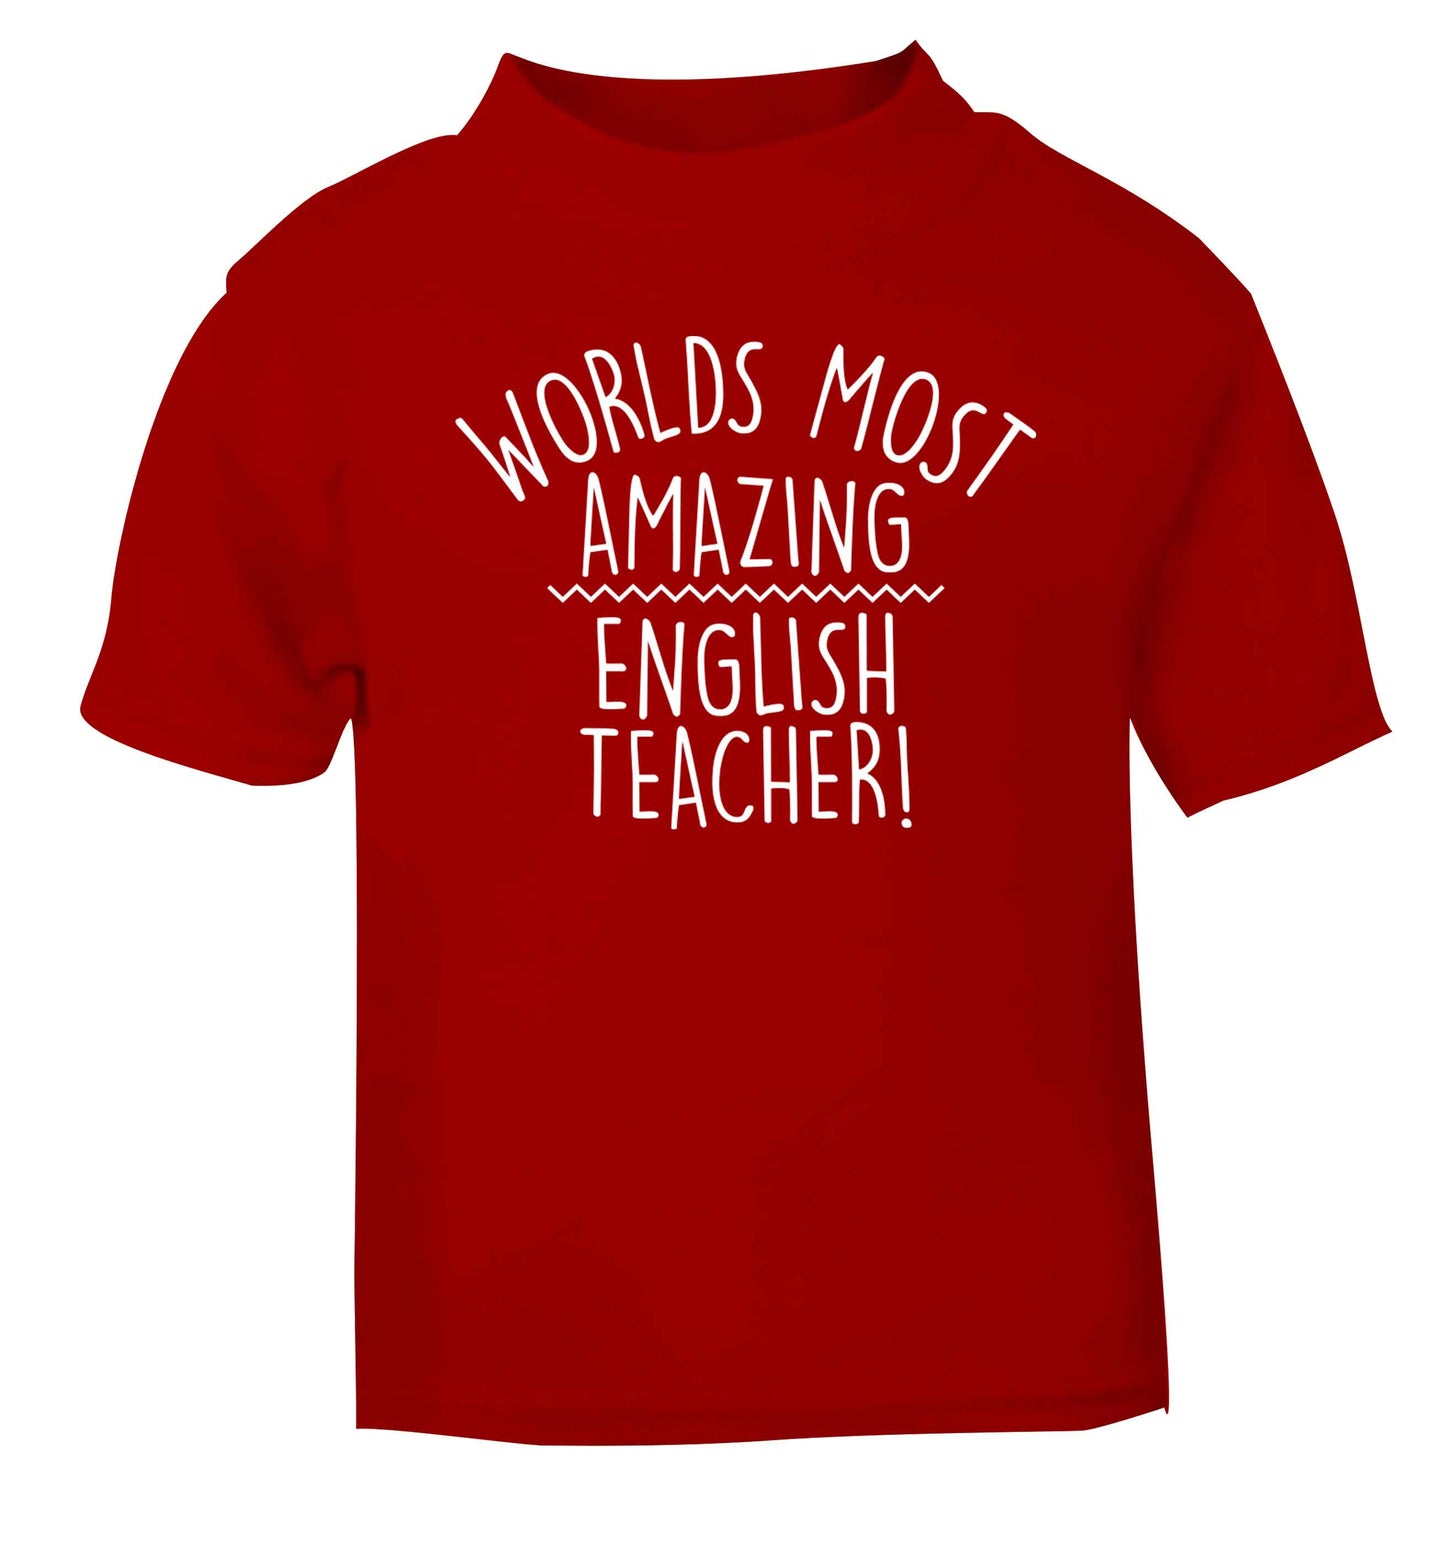 Worlds most amazing English teacher red baby toddler Tshirt 2 Years